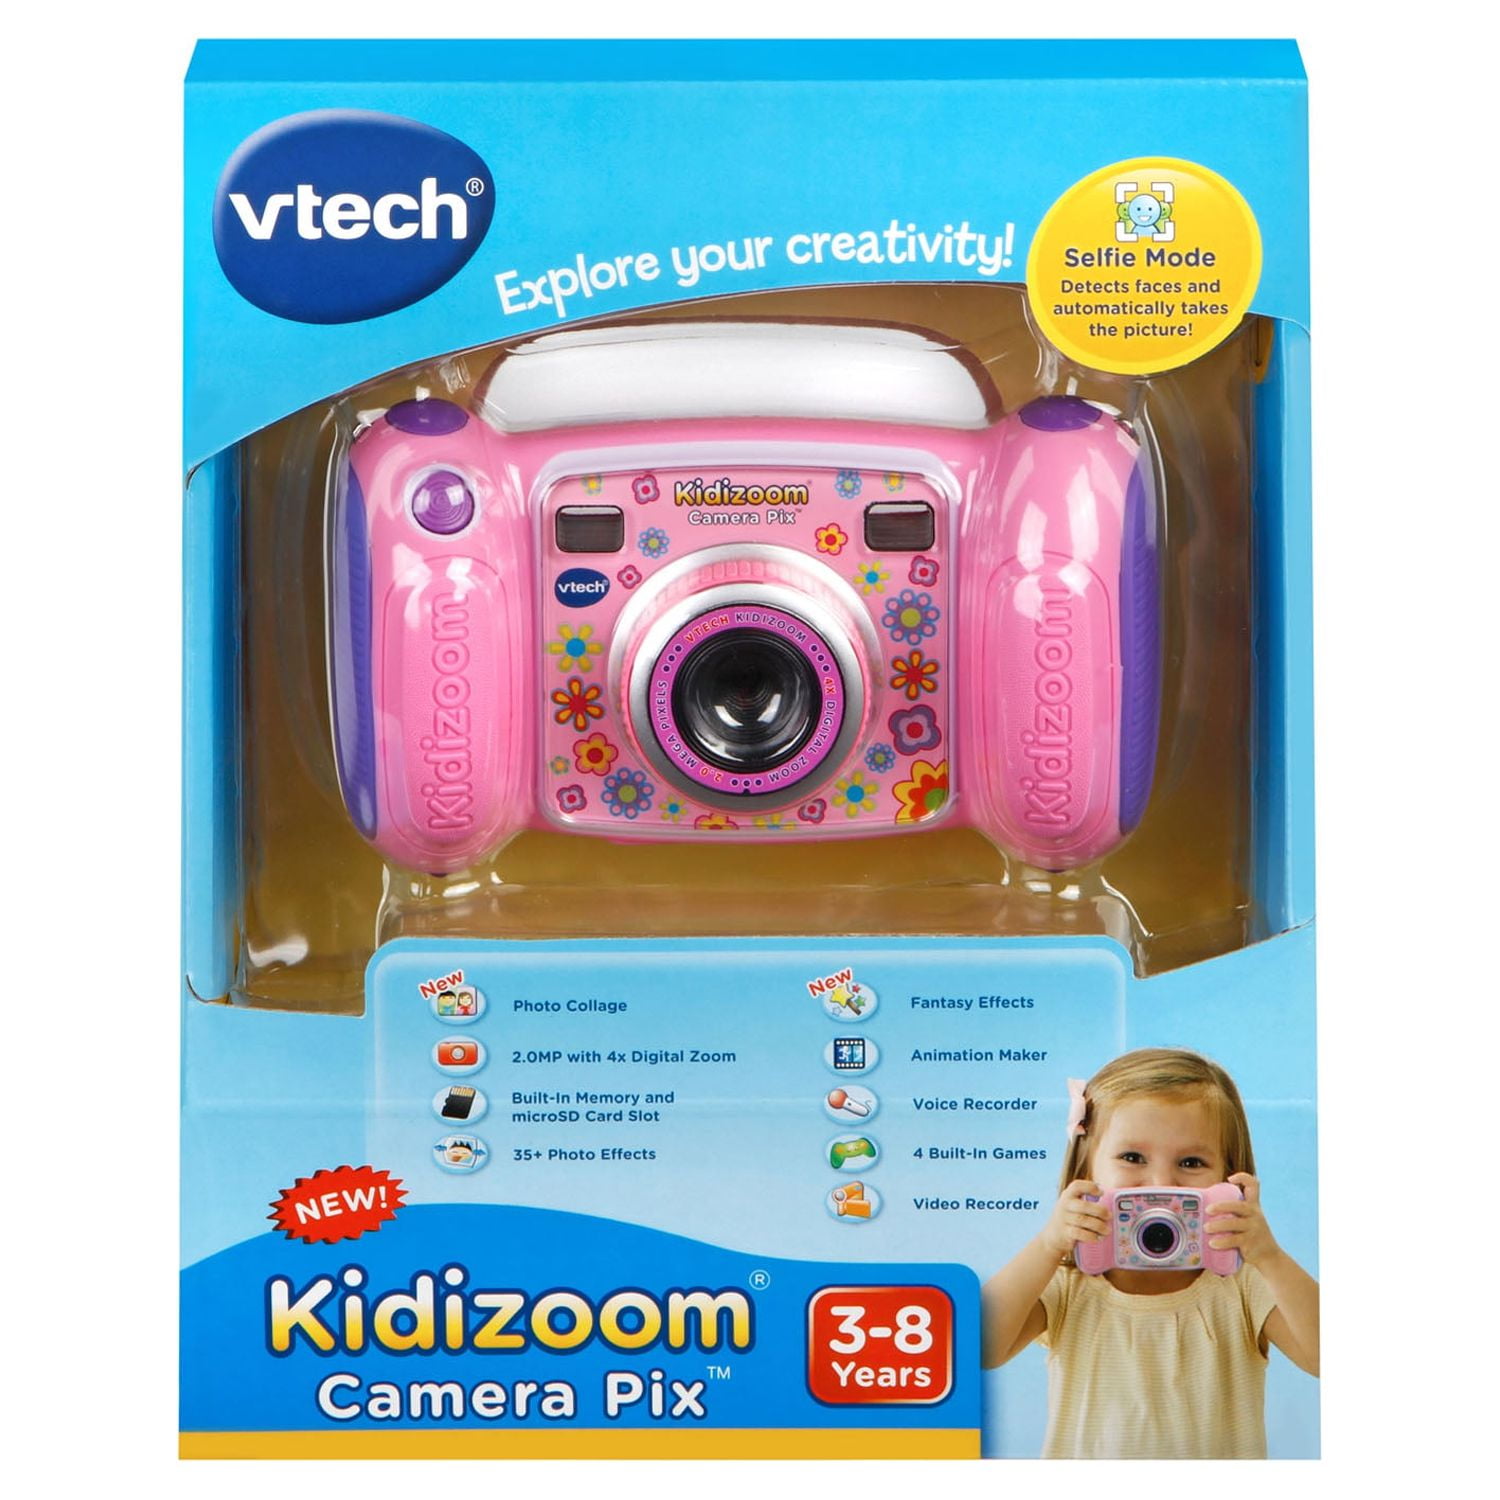 VTECH KIDIZOOM DUO 5.0 KIDS DIGITAL CAMERA PINK + FREE 32GB SD CARD